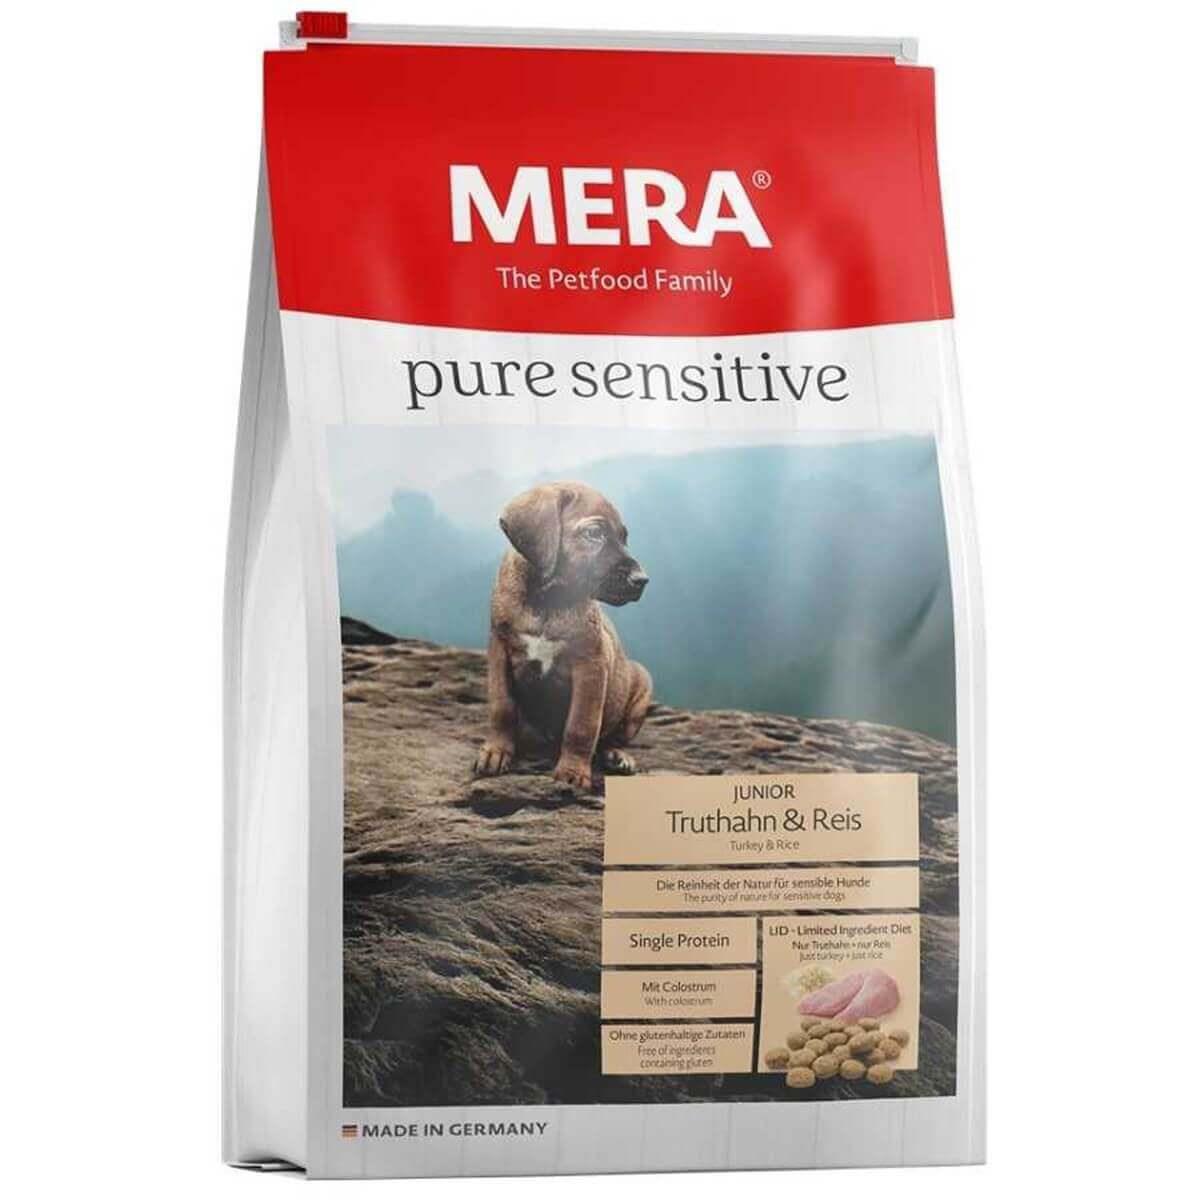 Mera Pure Sensitive Hindili Tüm Irklar Yavru Kuru Köpek Maması 12.5 kg